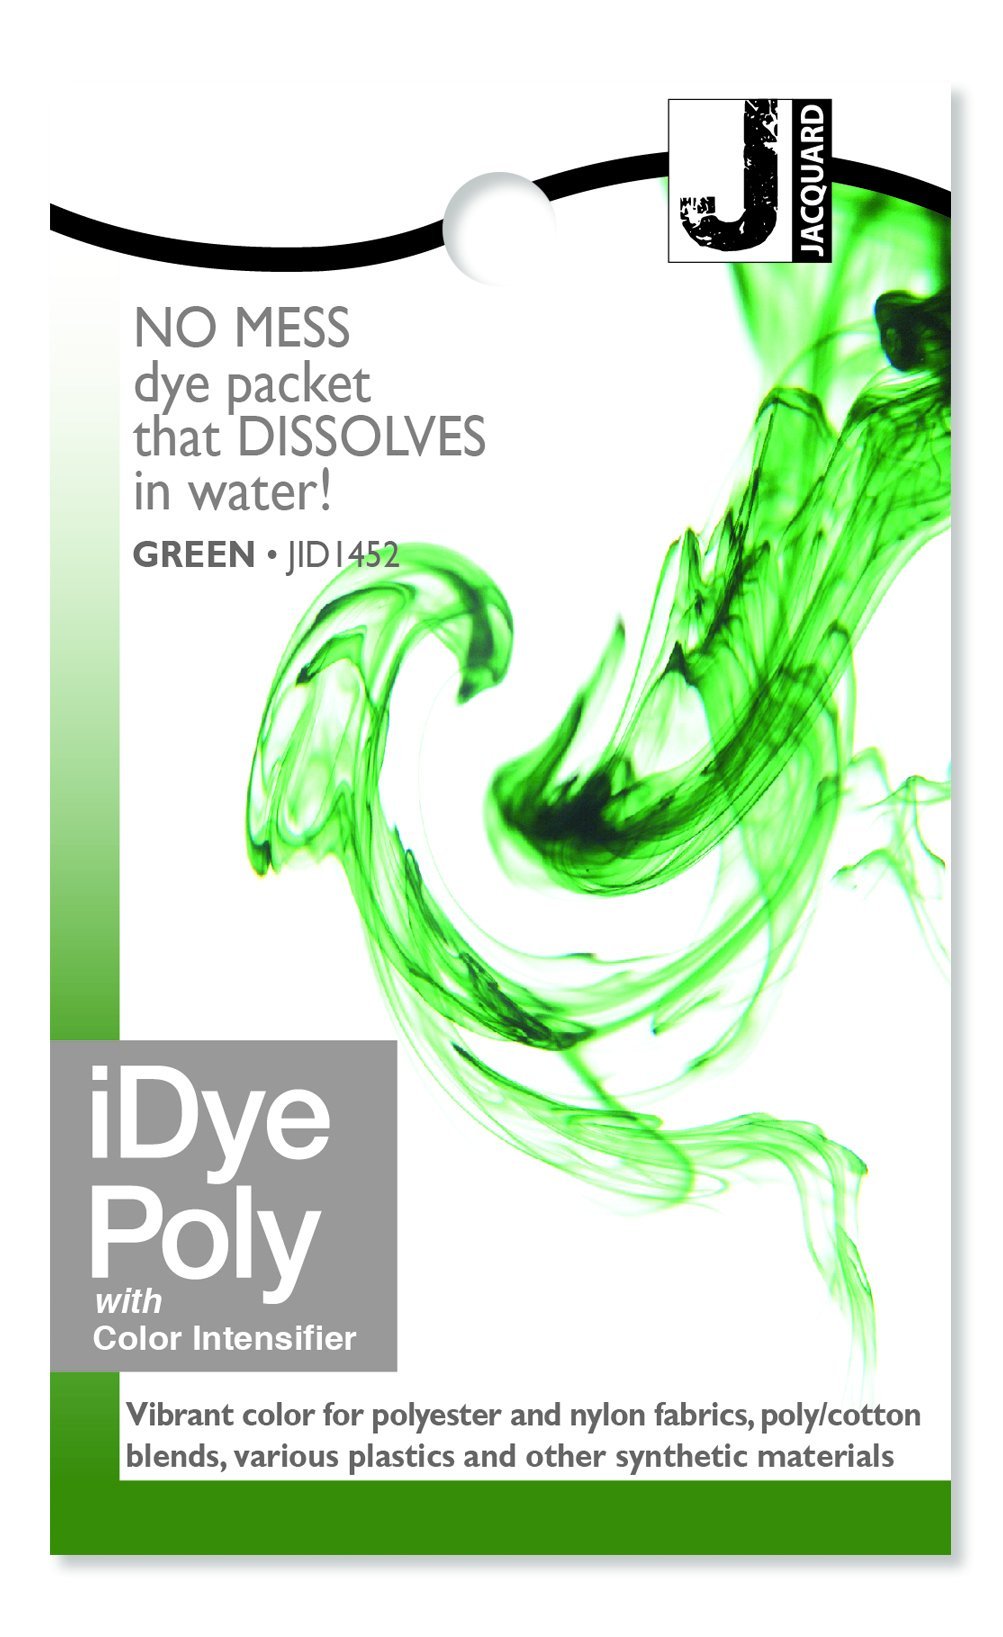 Acquistare iDye tintura tessile, poli online